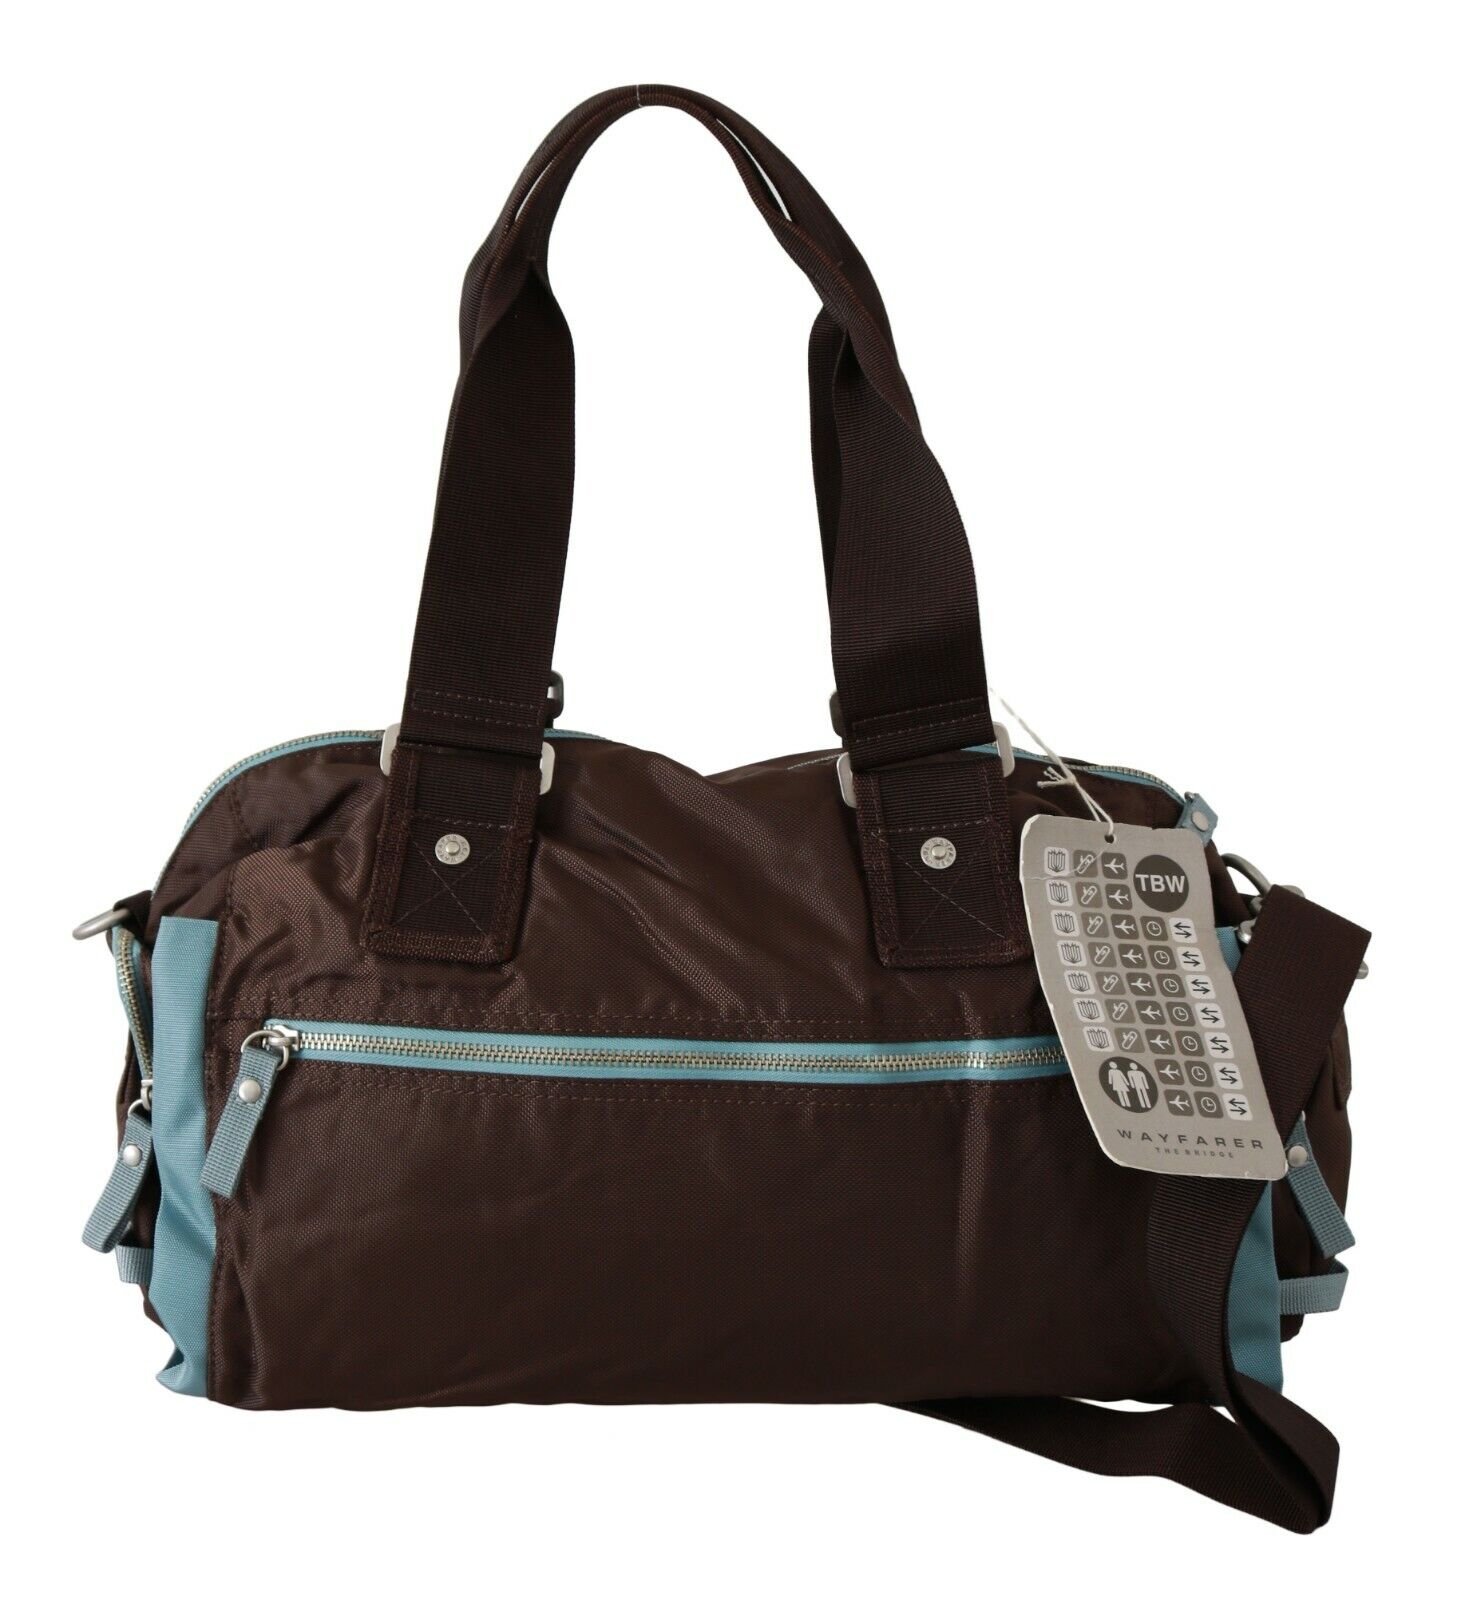 WAYFARER Brown Handbag Duffel Travel Purse - Fizigo